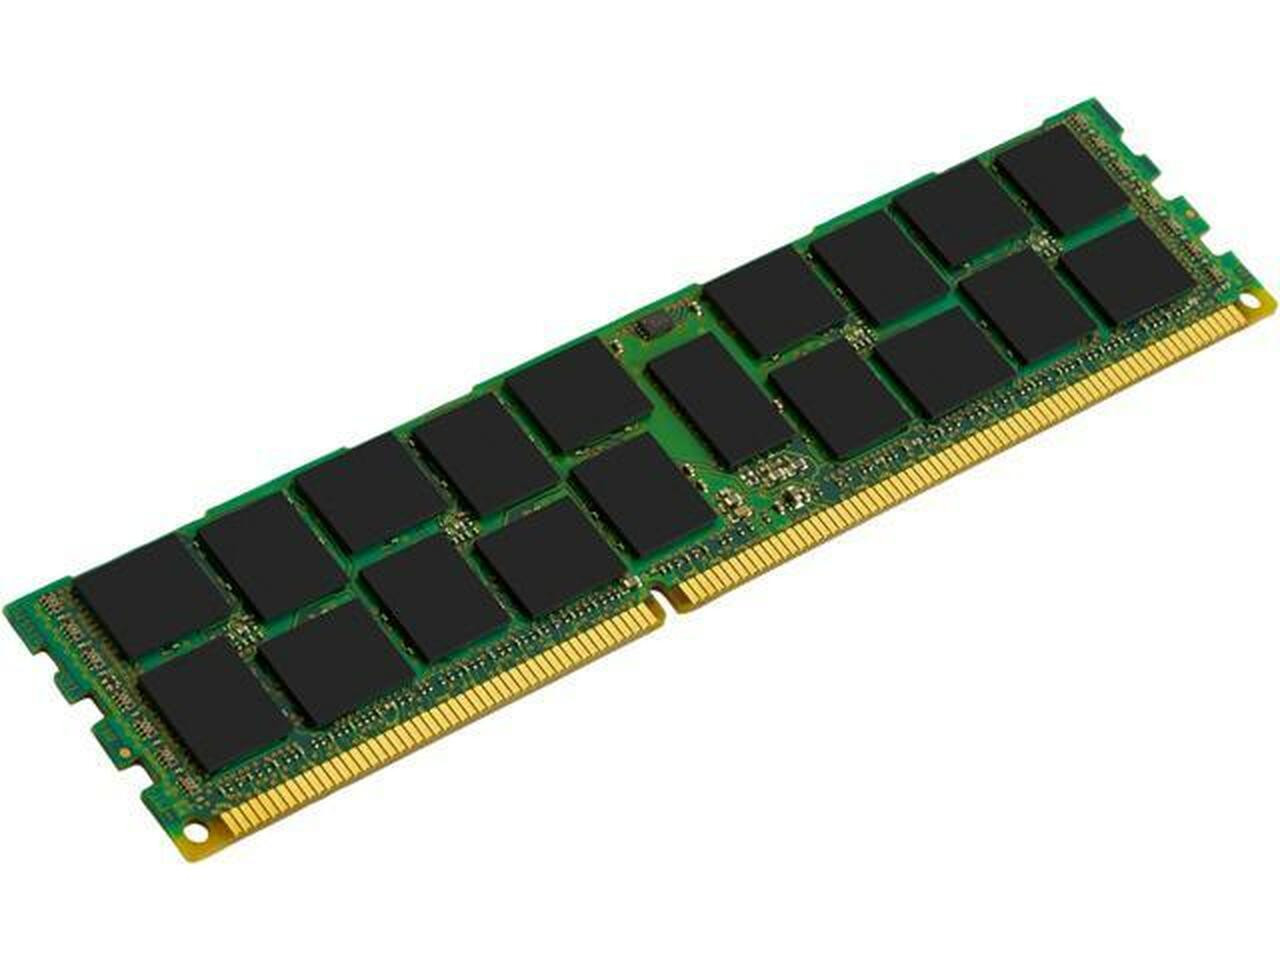 Netpatibles 16GB DDR4 SDRAM Memory Module - P00920-H21-NPM